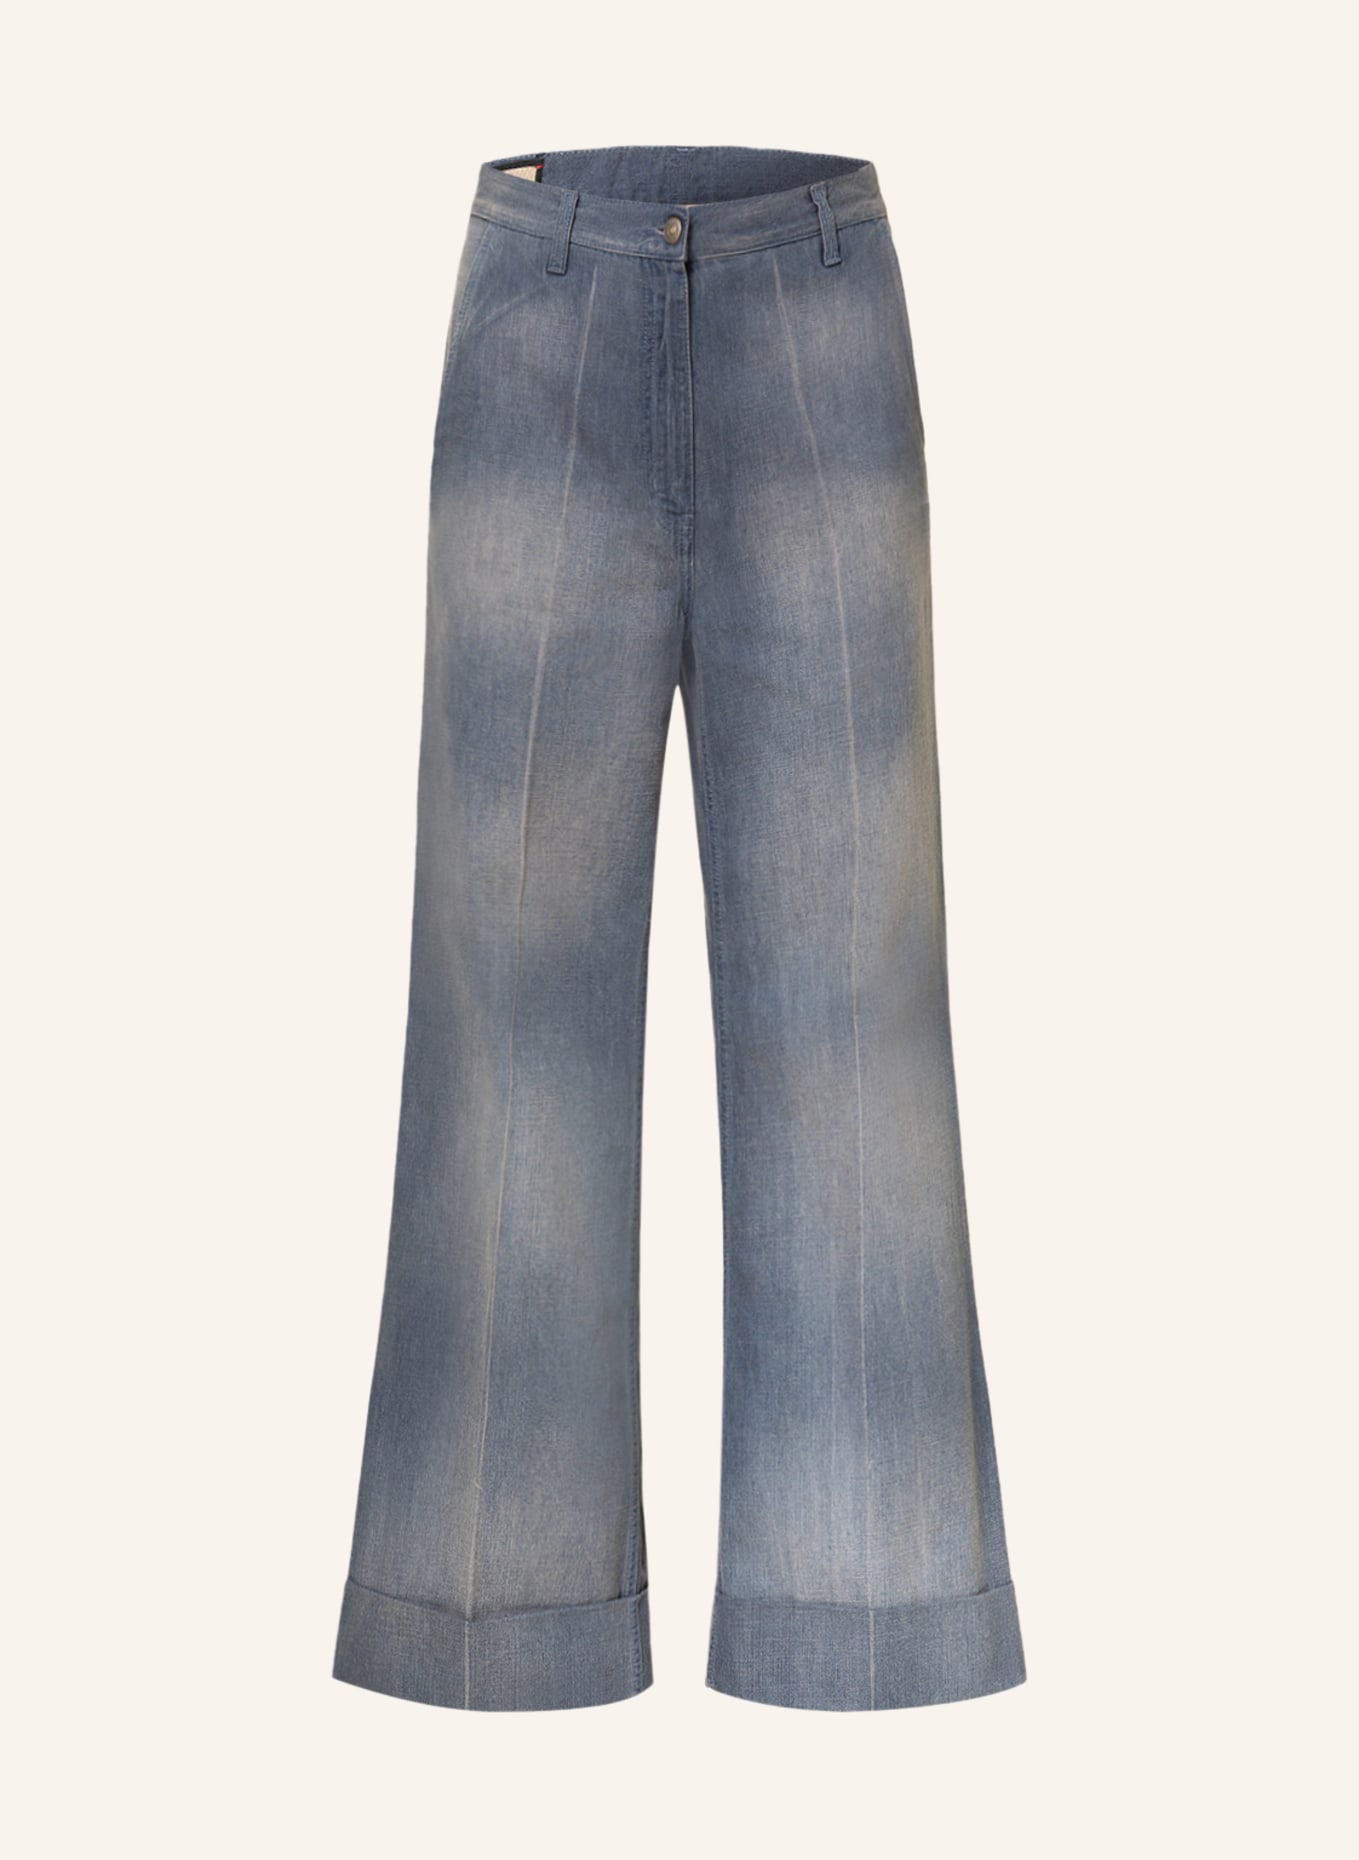 GUCCI Flared Jeans, Farbe: 4700 DUSTY LIGHT BLUE (Bild 1)